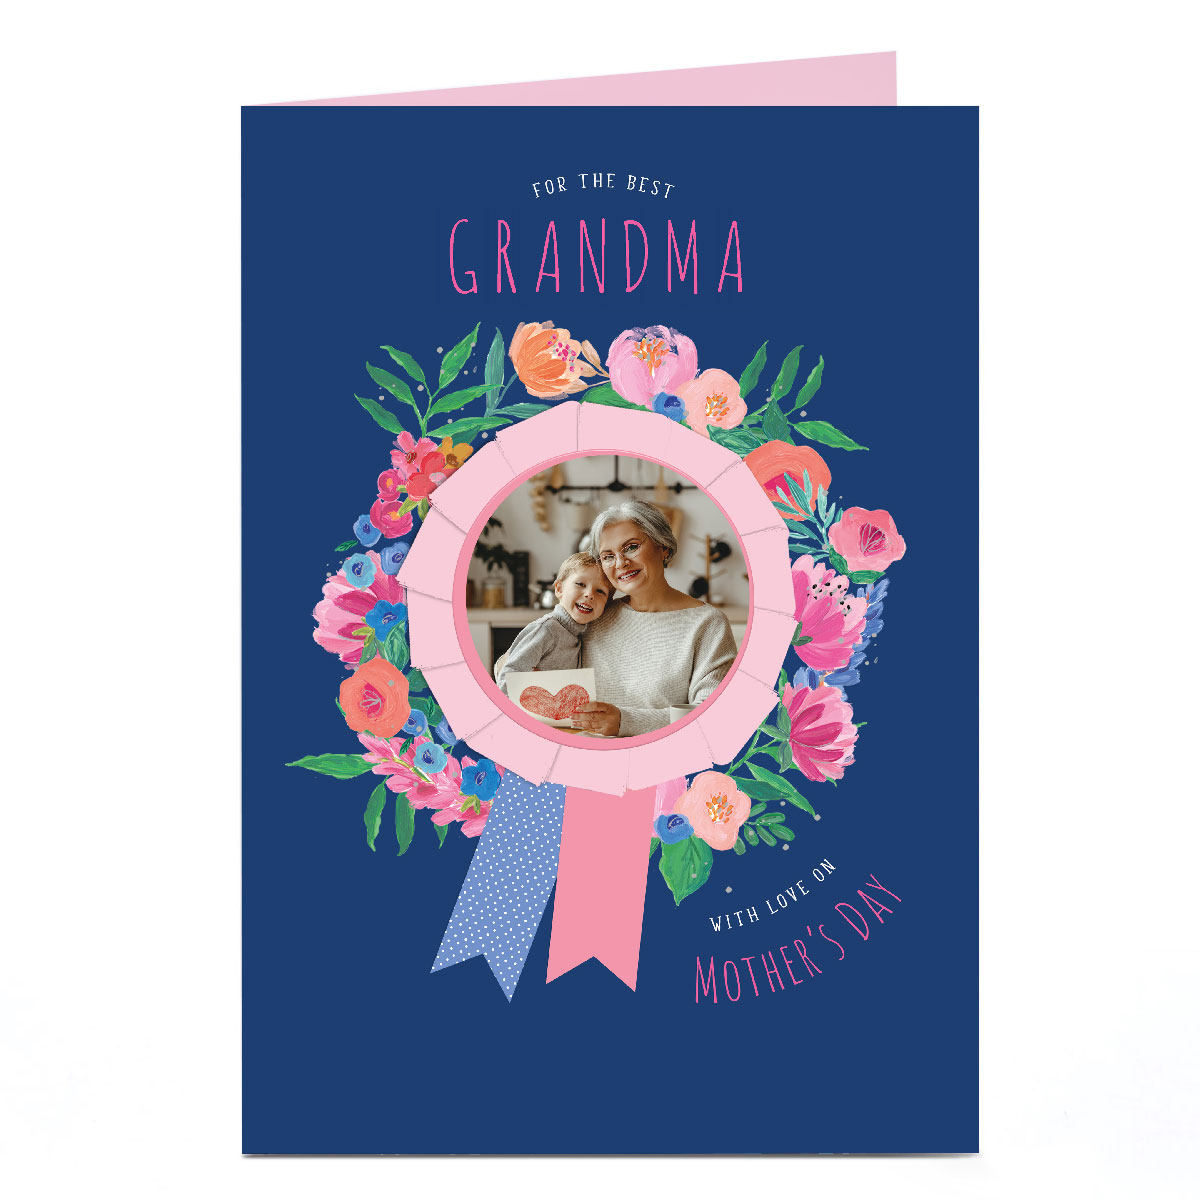 Personalised Mother's Day Photo Card - Ribbon Grandma